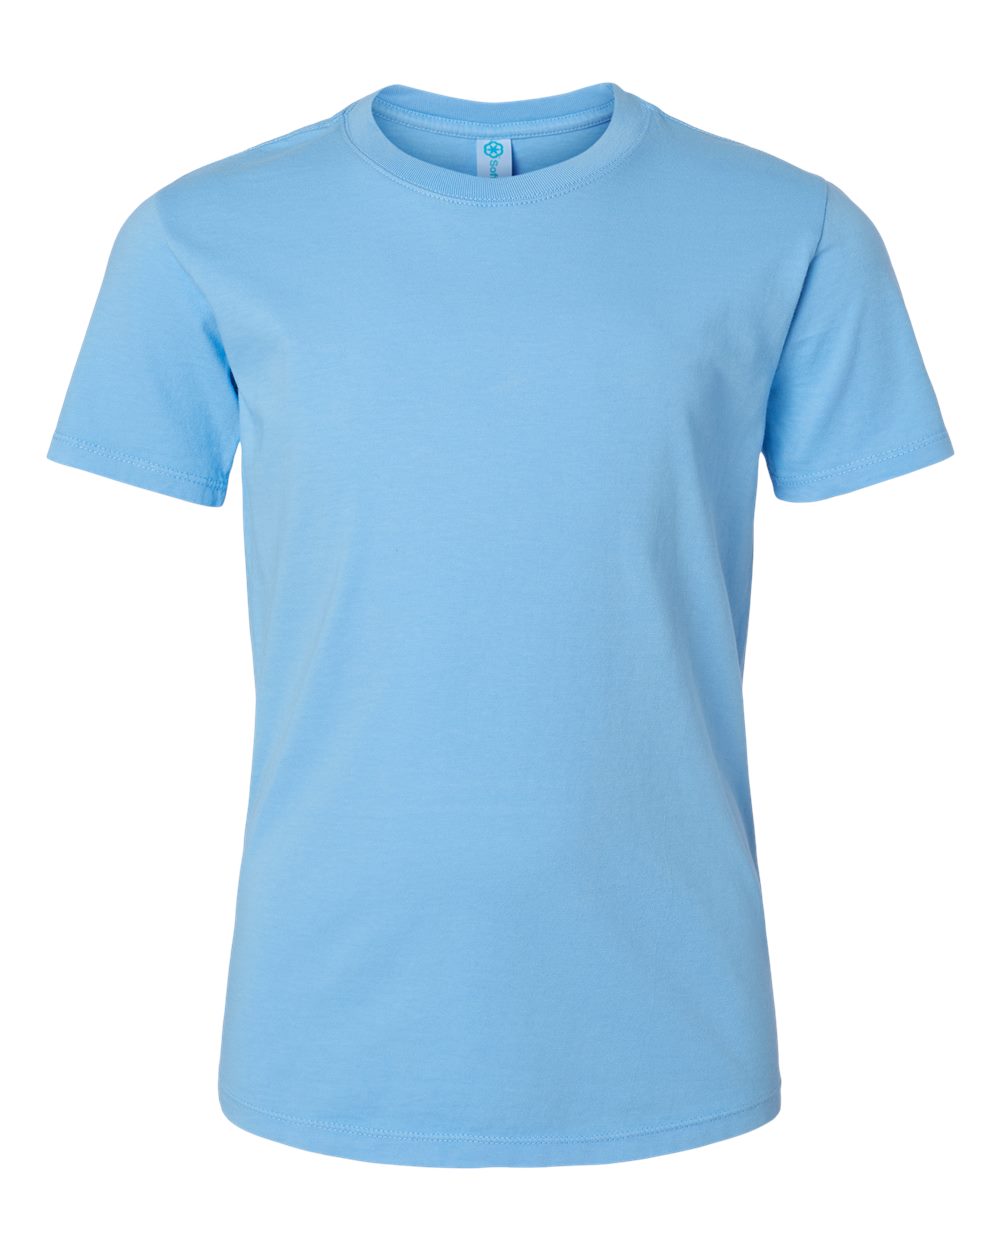 SoftShirts 202 - Youth Classic T-Shirt